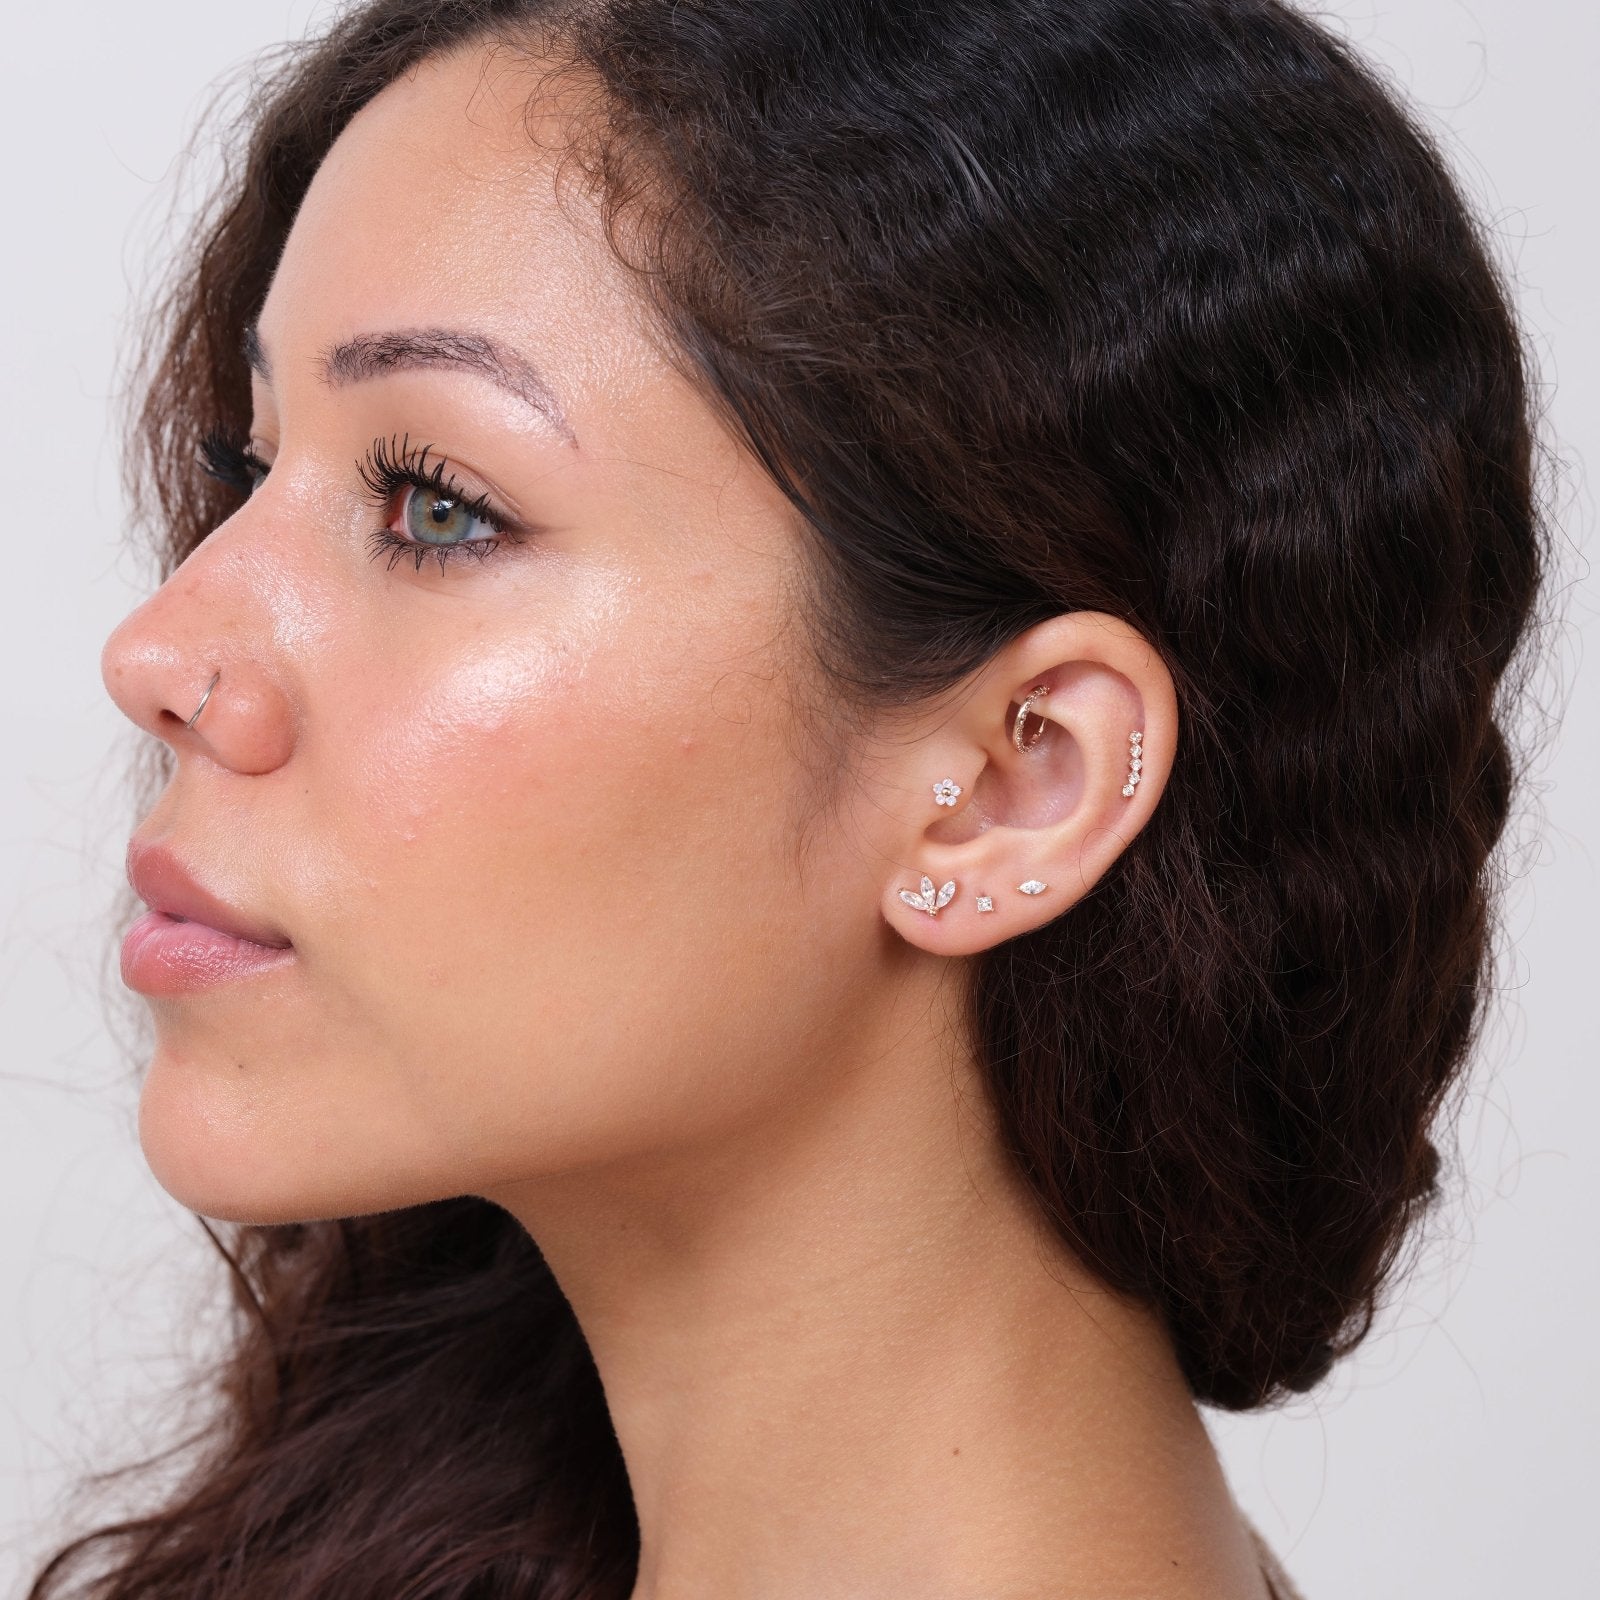 Diamond Constellation Ear Climber Flat Back Earring Earrings Estella Collection #product_description# 17956 14k April Birthstone Birthstone #tag4# #tag5# #tag6# #tag7# #tag8# #tag9# #tag10# 5MM